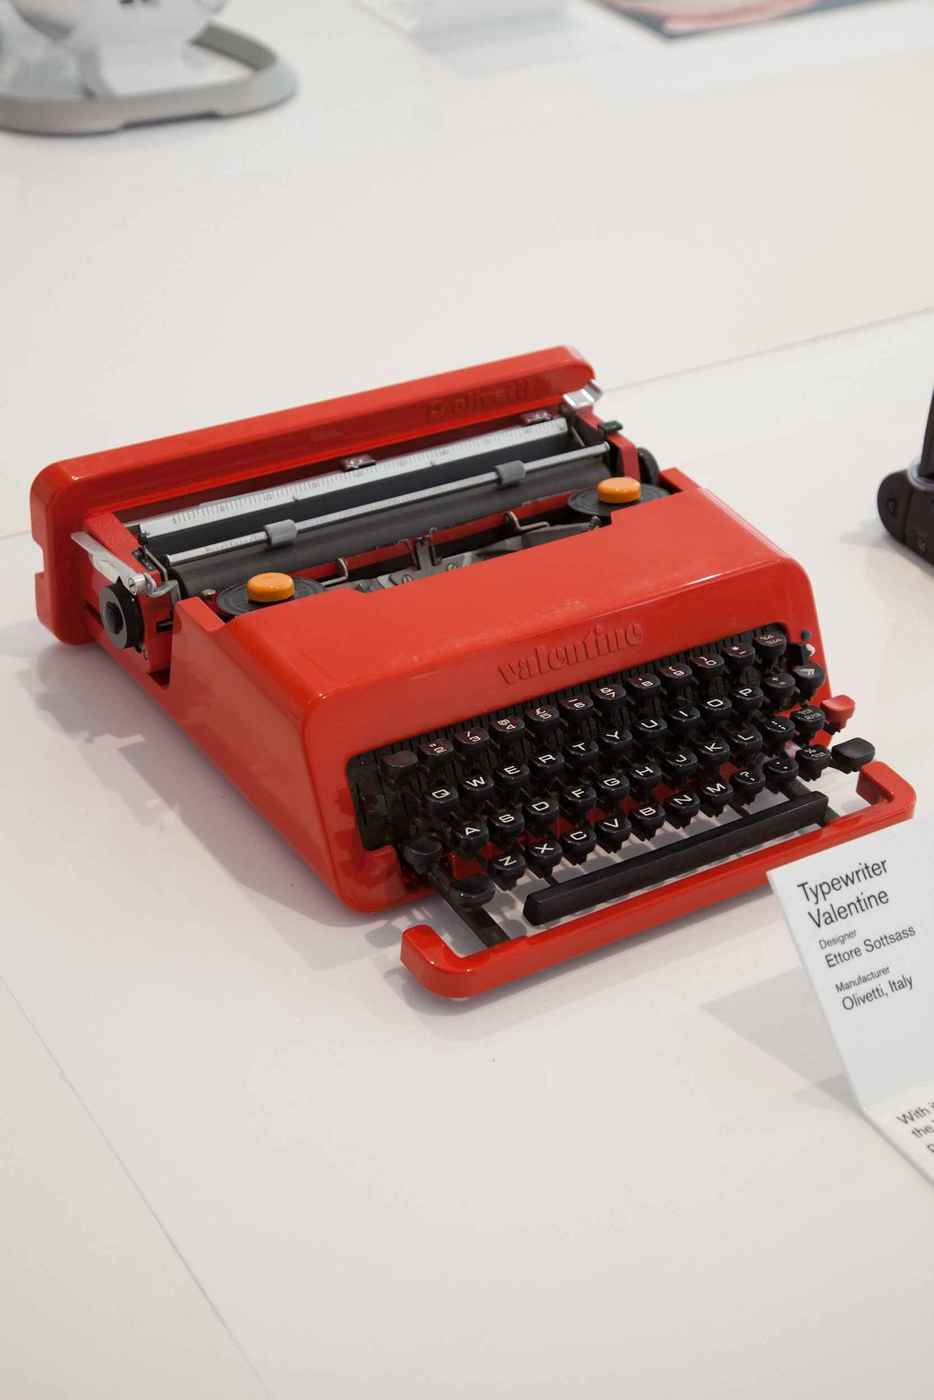 The Olivetti Valentine typewriter (Design Museum)